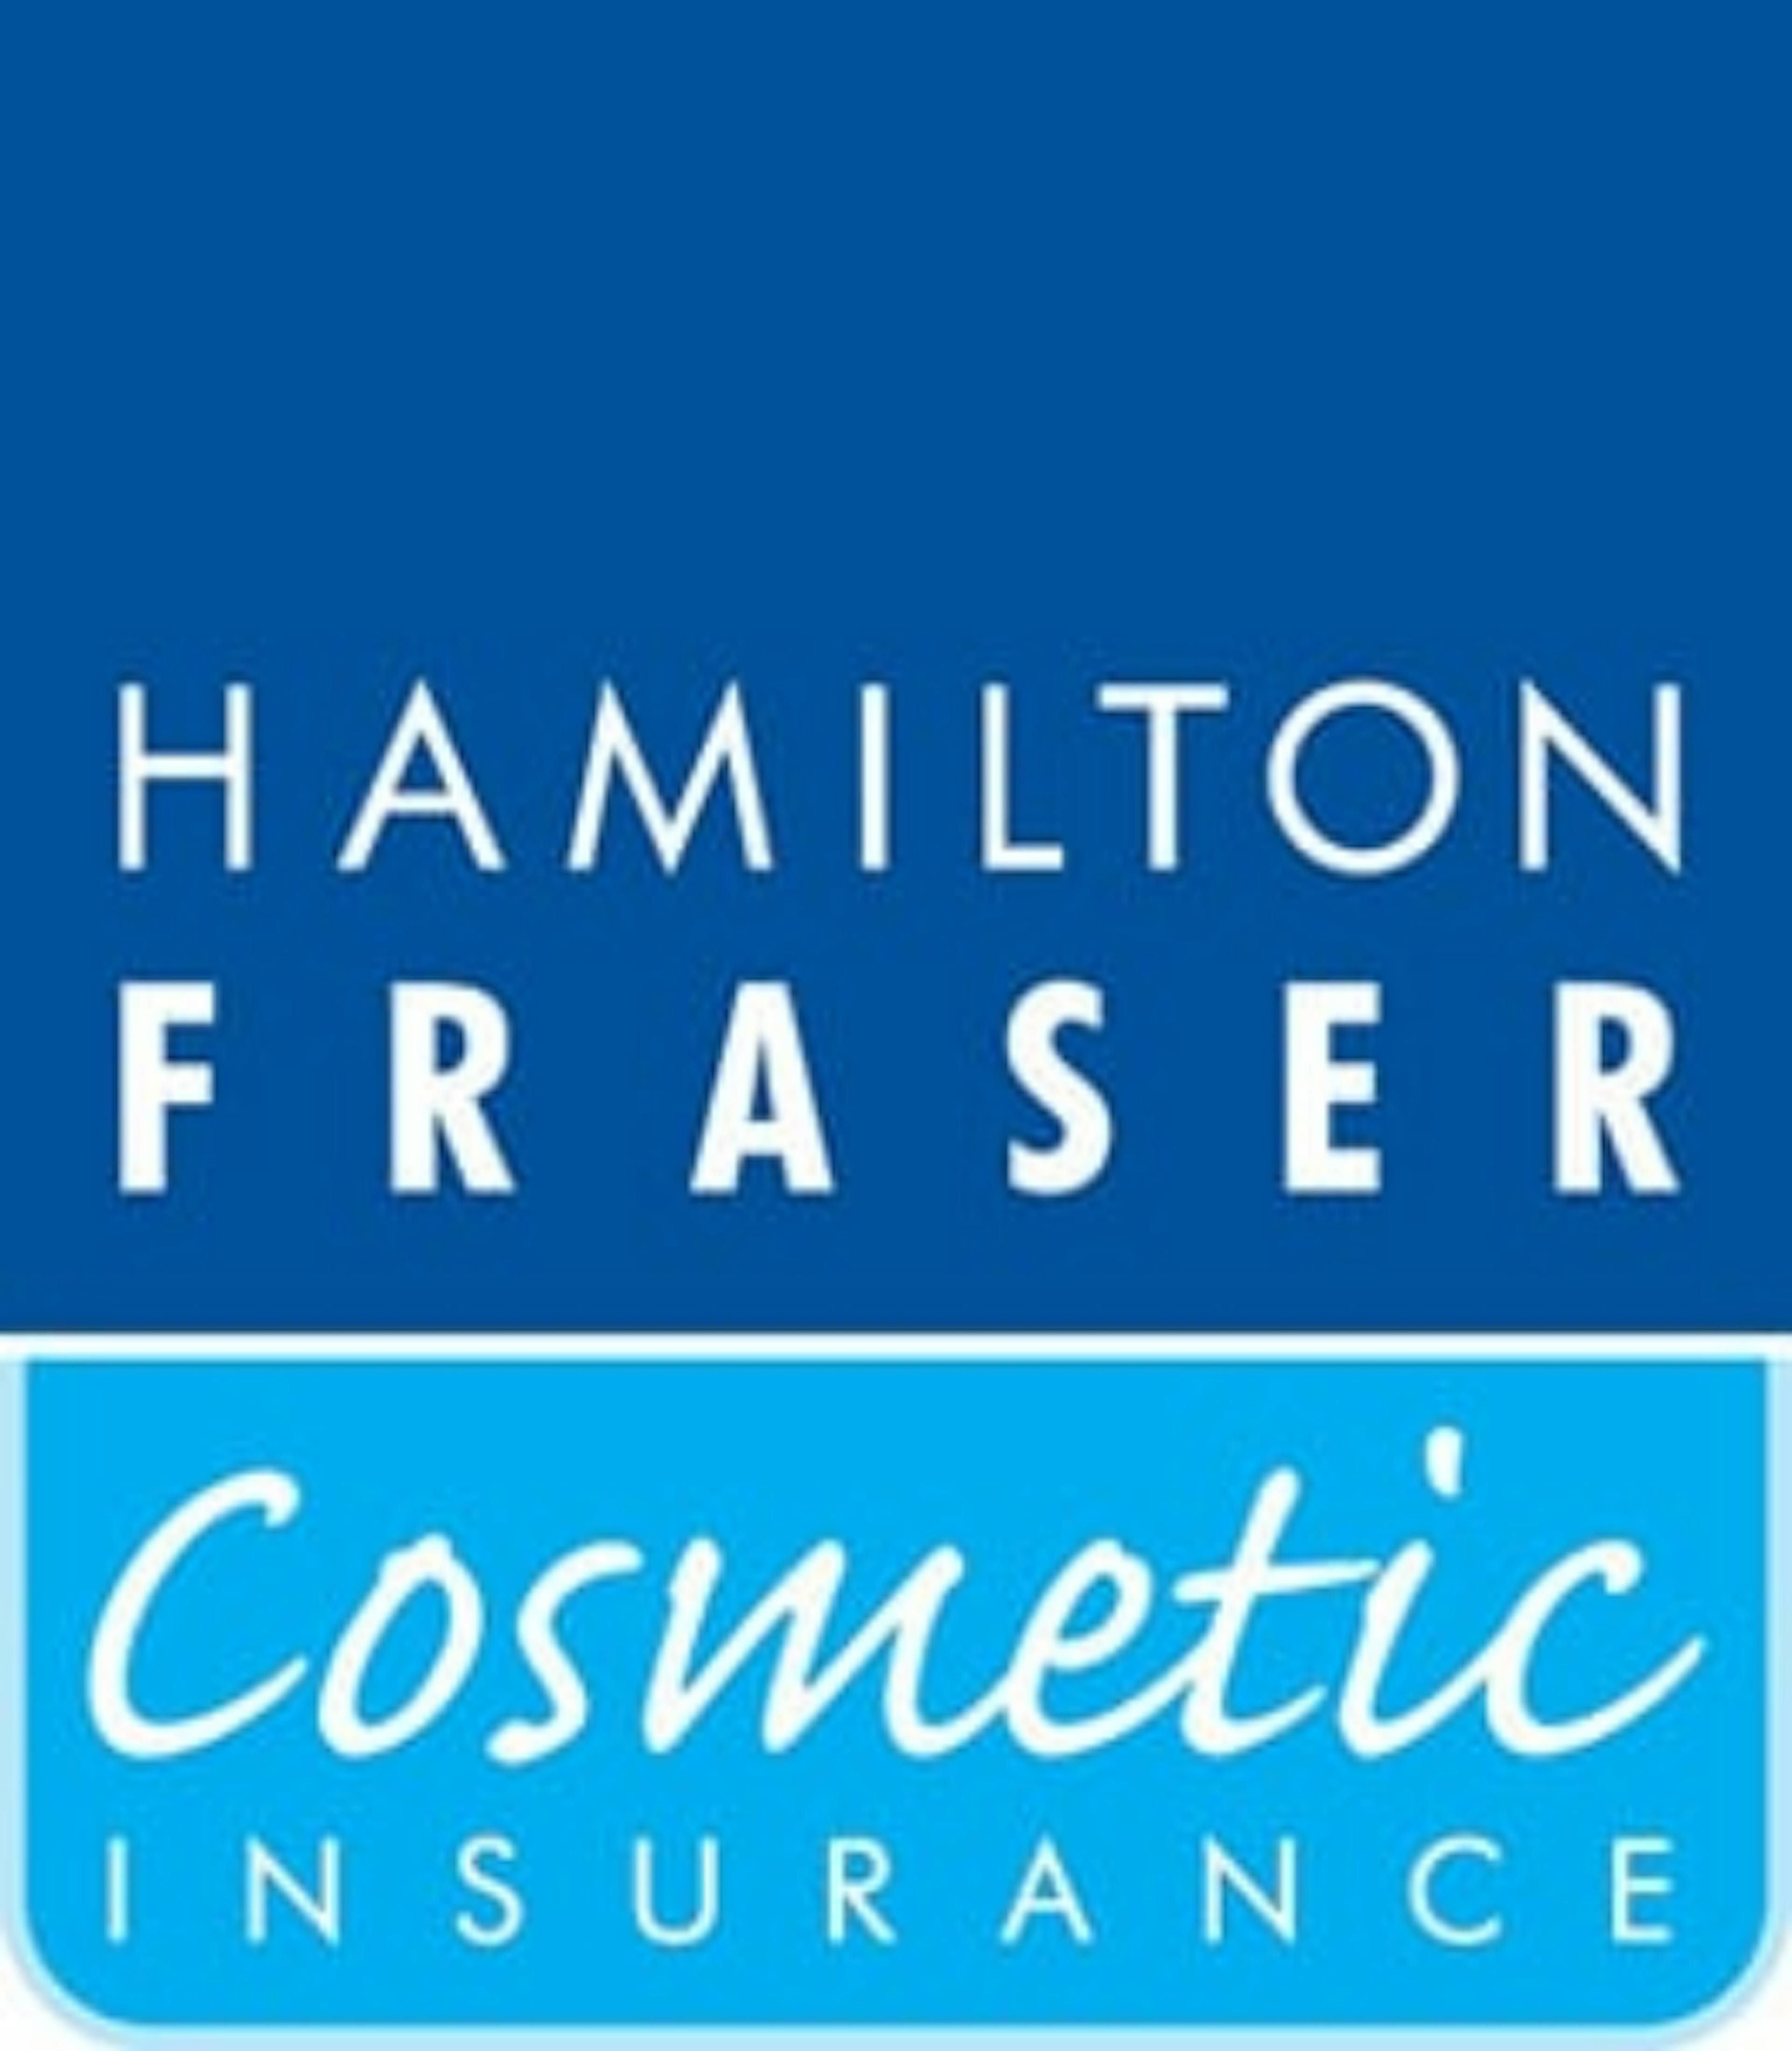 Hamilton Fraser Cosmetic